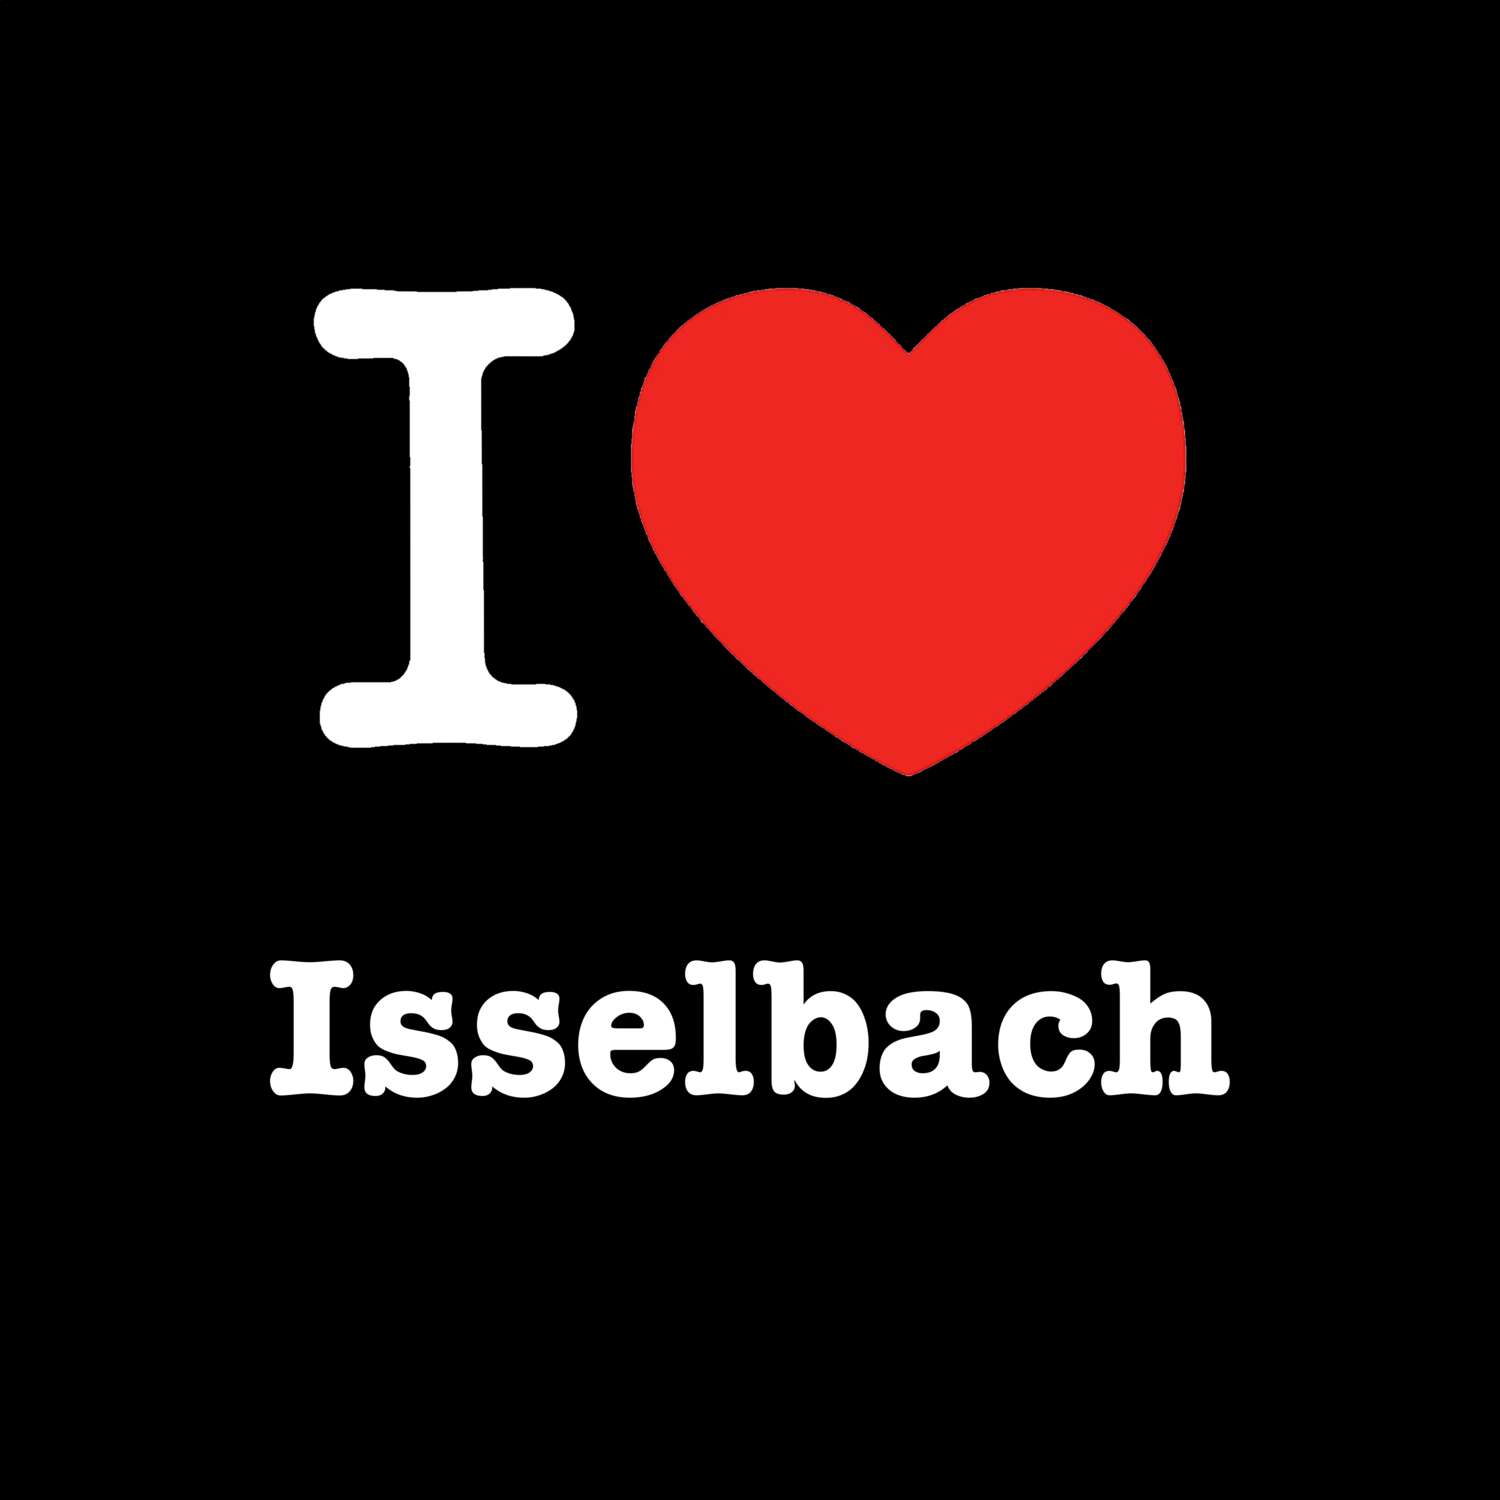 Isselbach T-Shirt »I love«